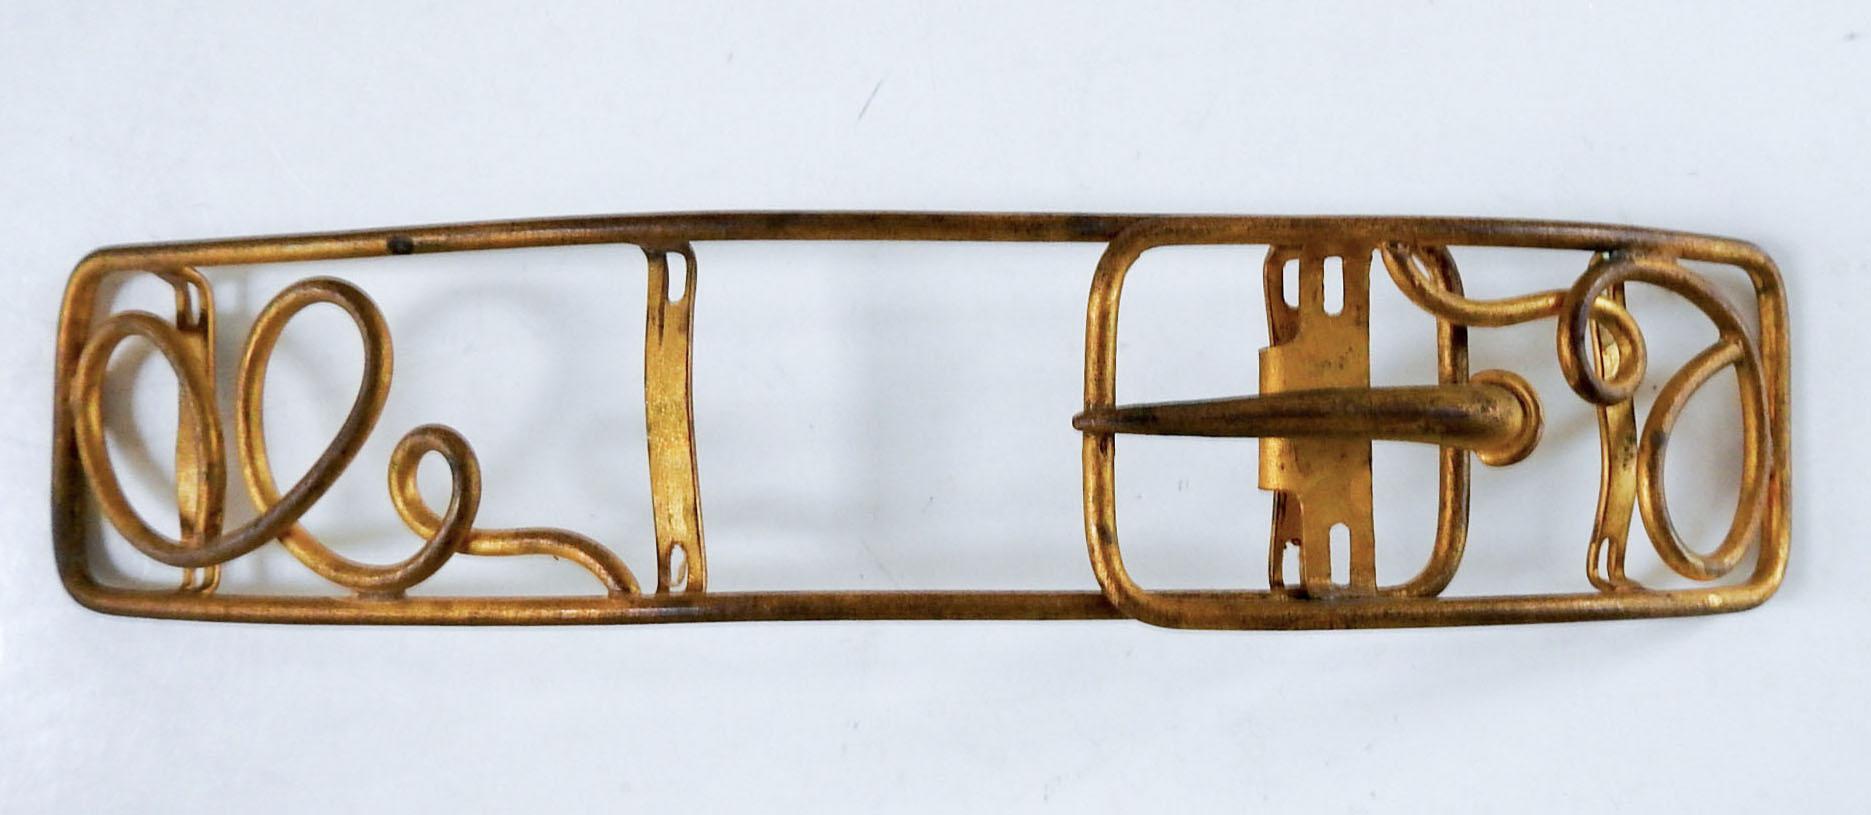 Antique circa 1890's gilt brass belt or sash buckle. Swirling Art Nouveau design, 2 pc. flat catch hook closure. 7